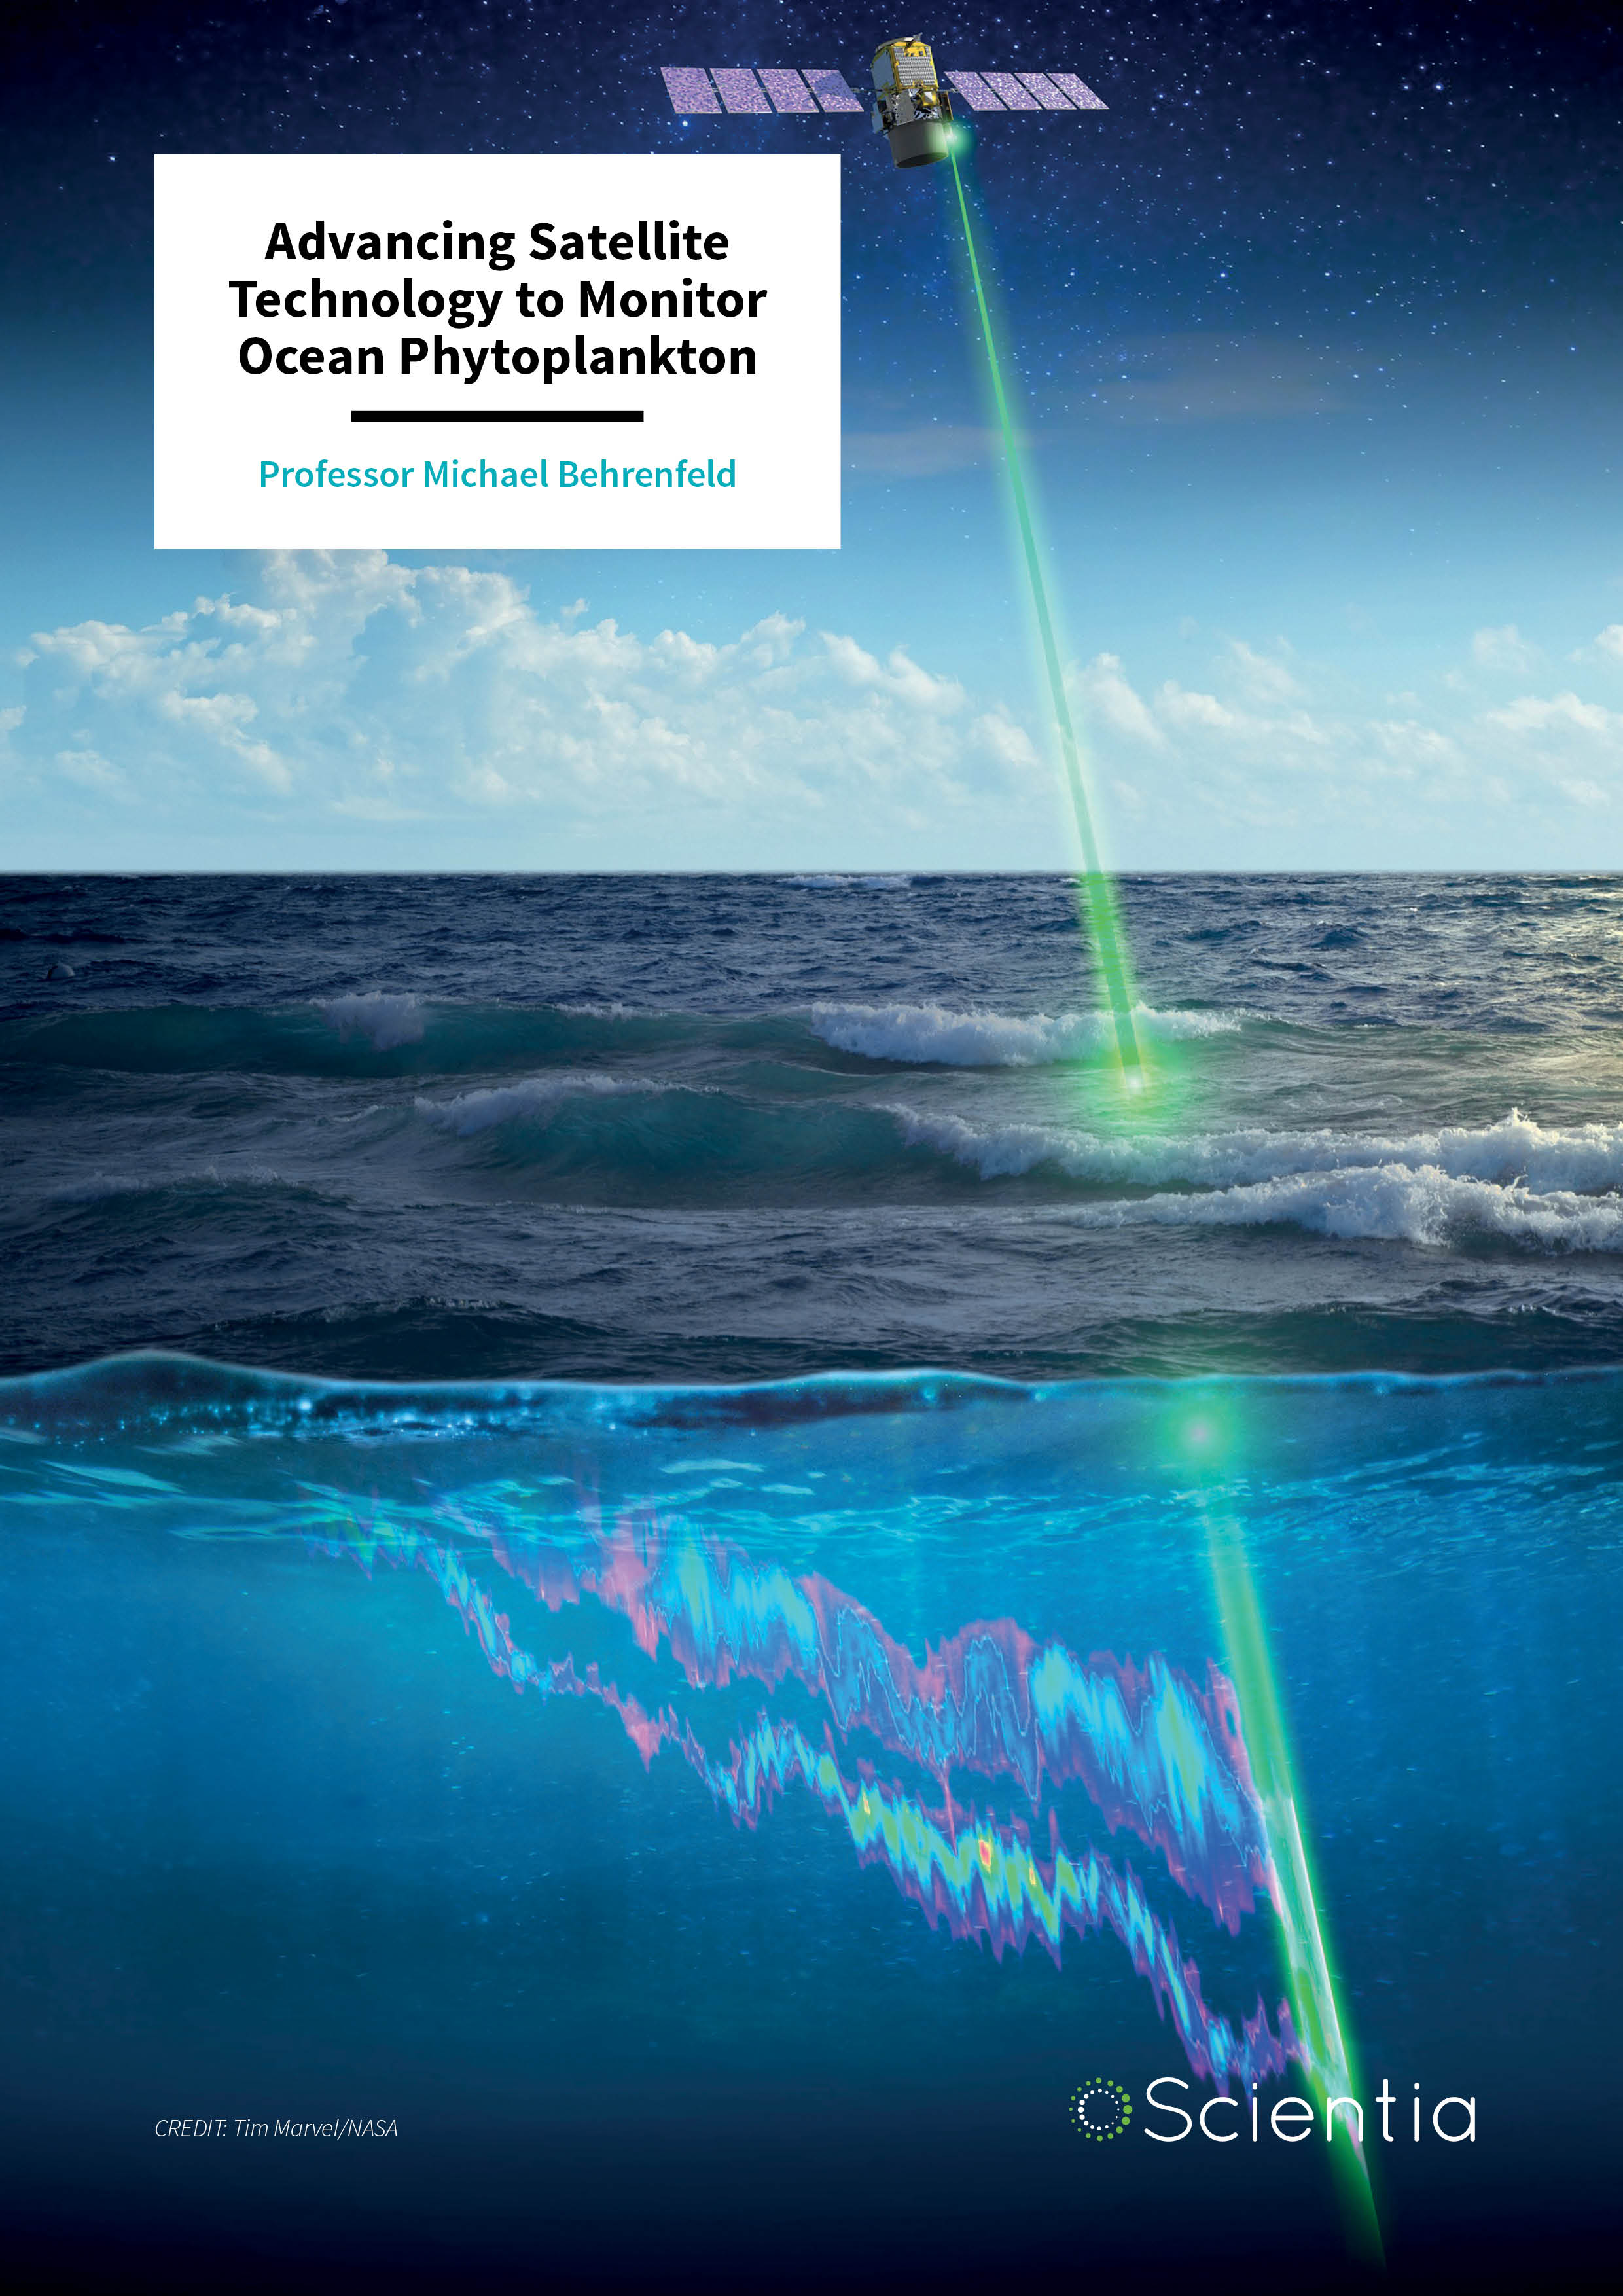 Professor Michael Behrenfeld – Advancing Satellite Technology to Monitor Ocean Phytoplankton